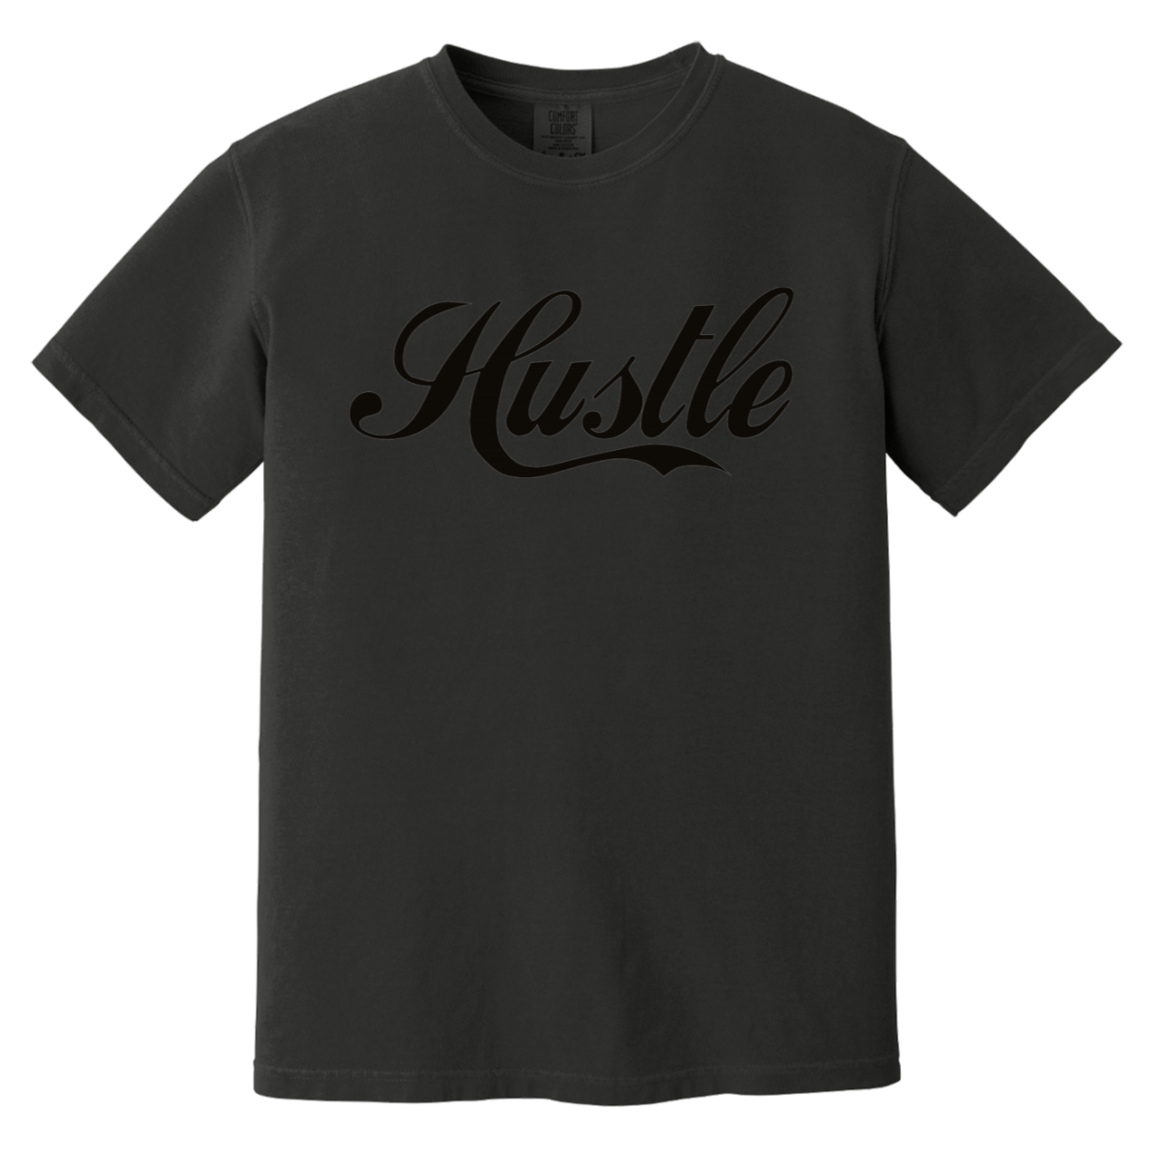 Hustle 2.0 Heavyweight T-Shirt - Hustle Everything